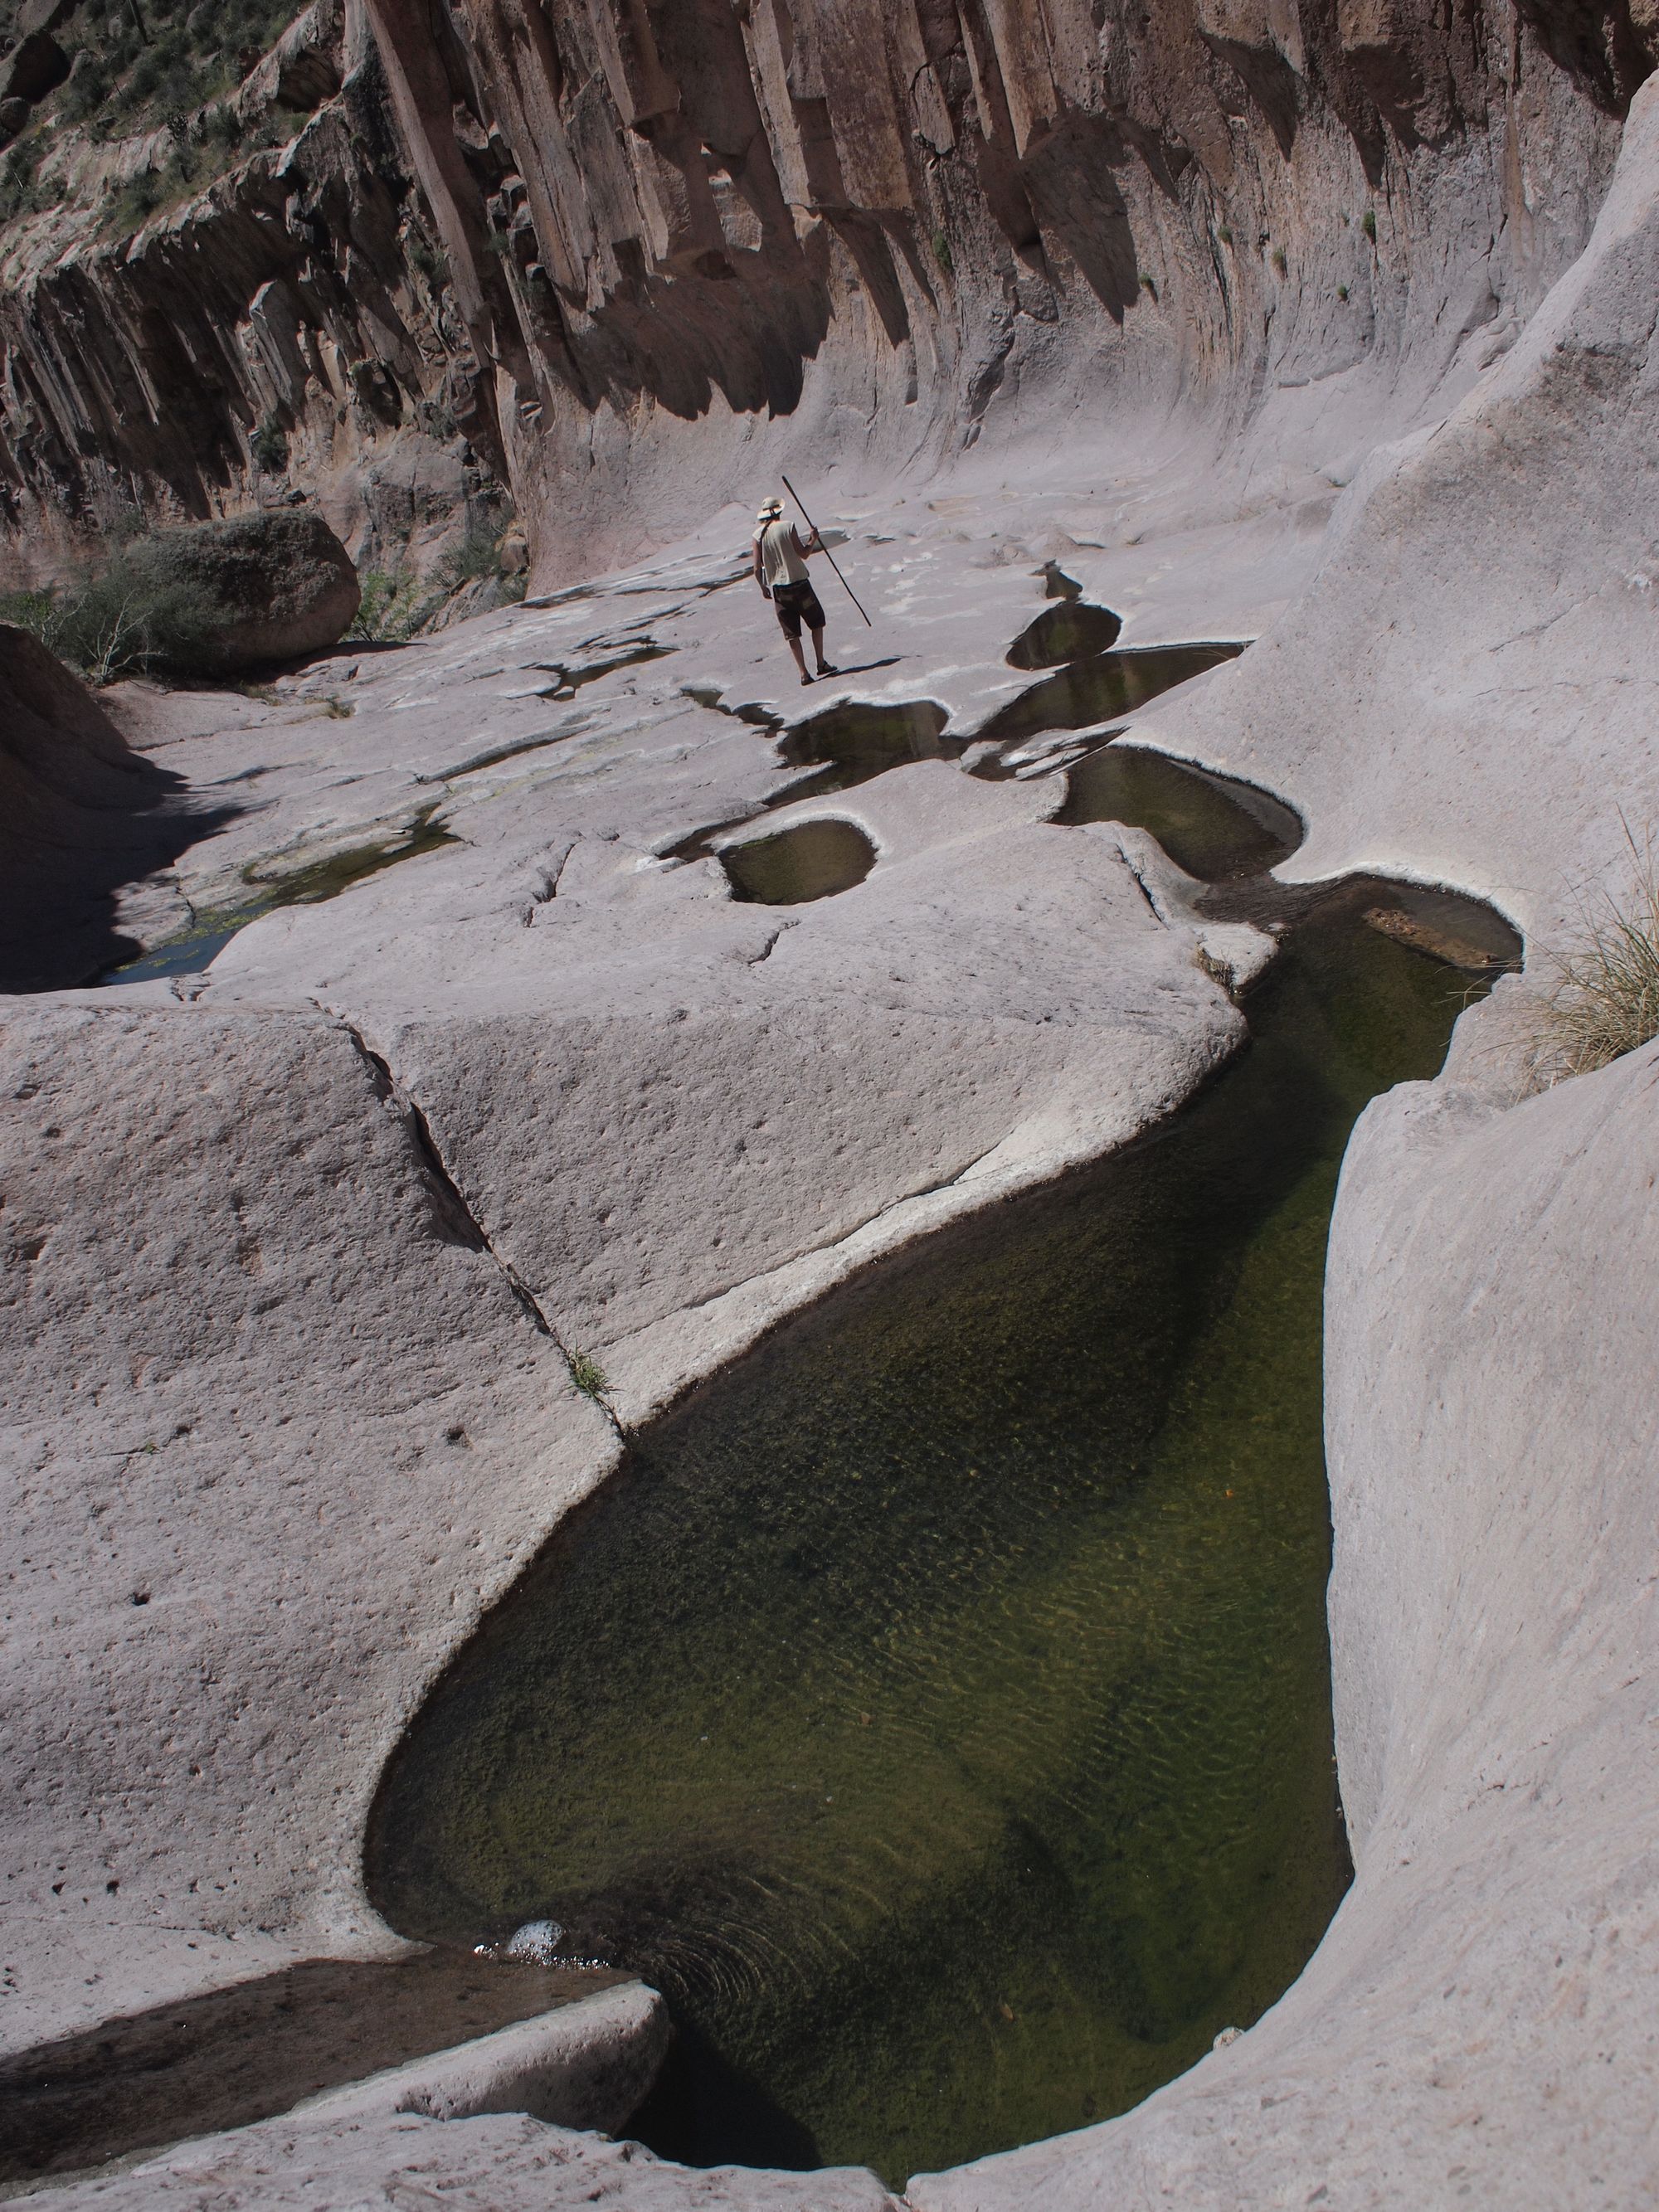 Man walking through a narrow basalt canyon with small water filled pools running through.